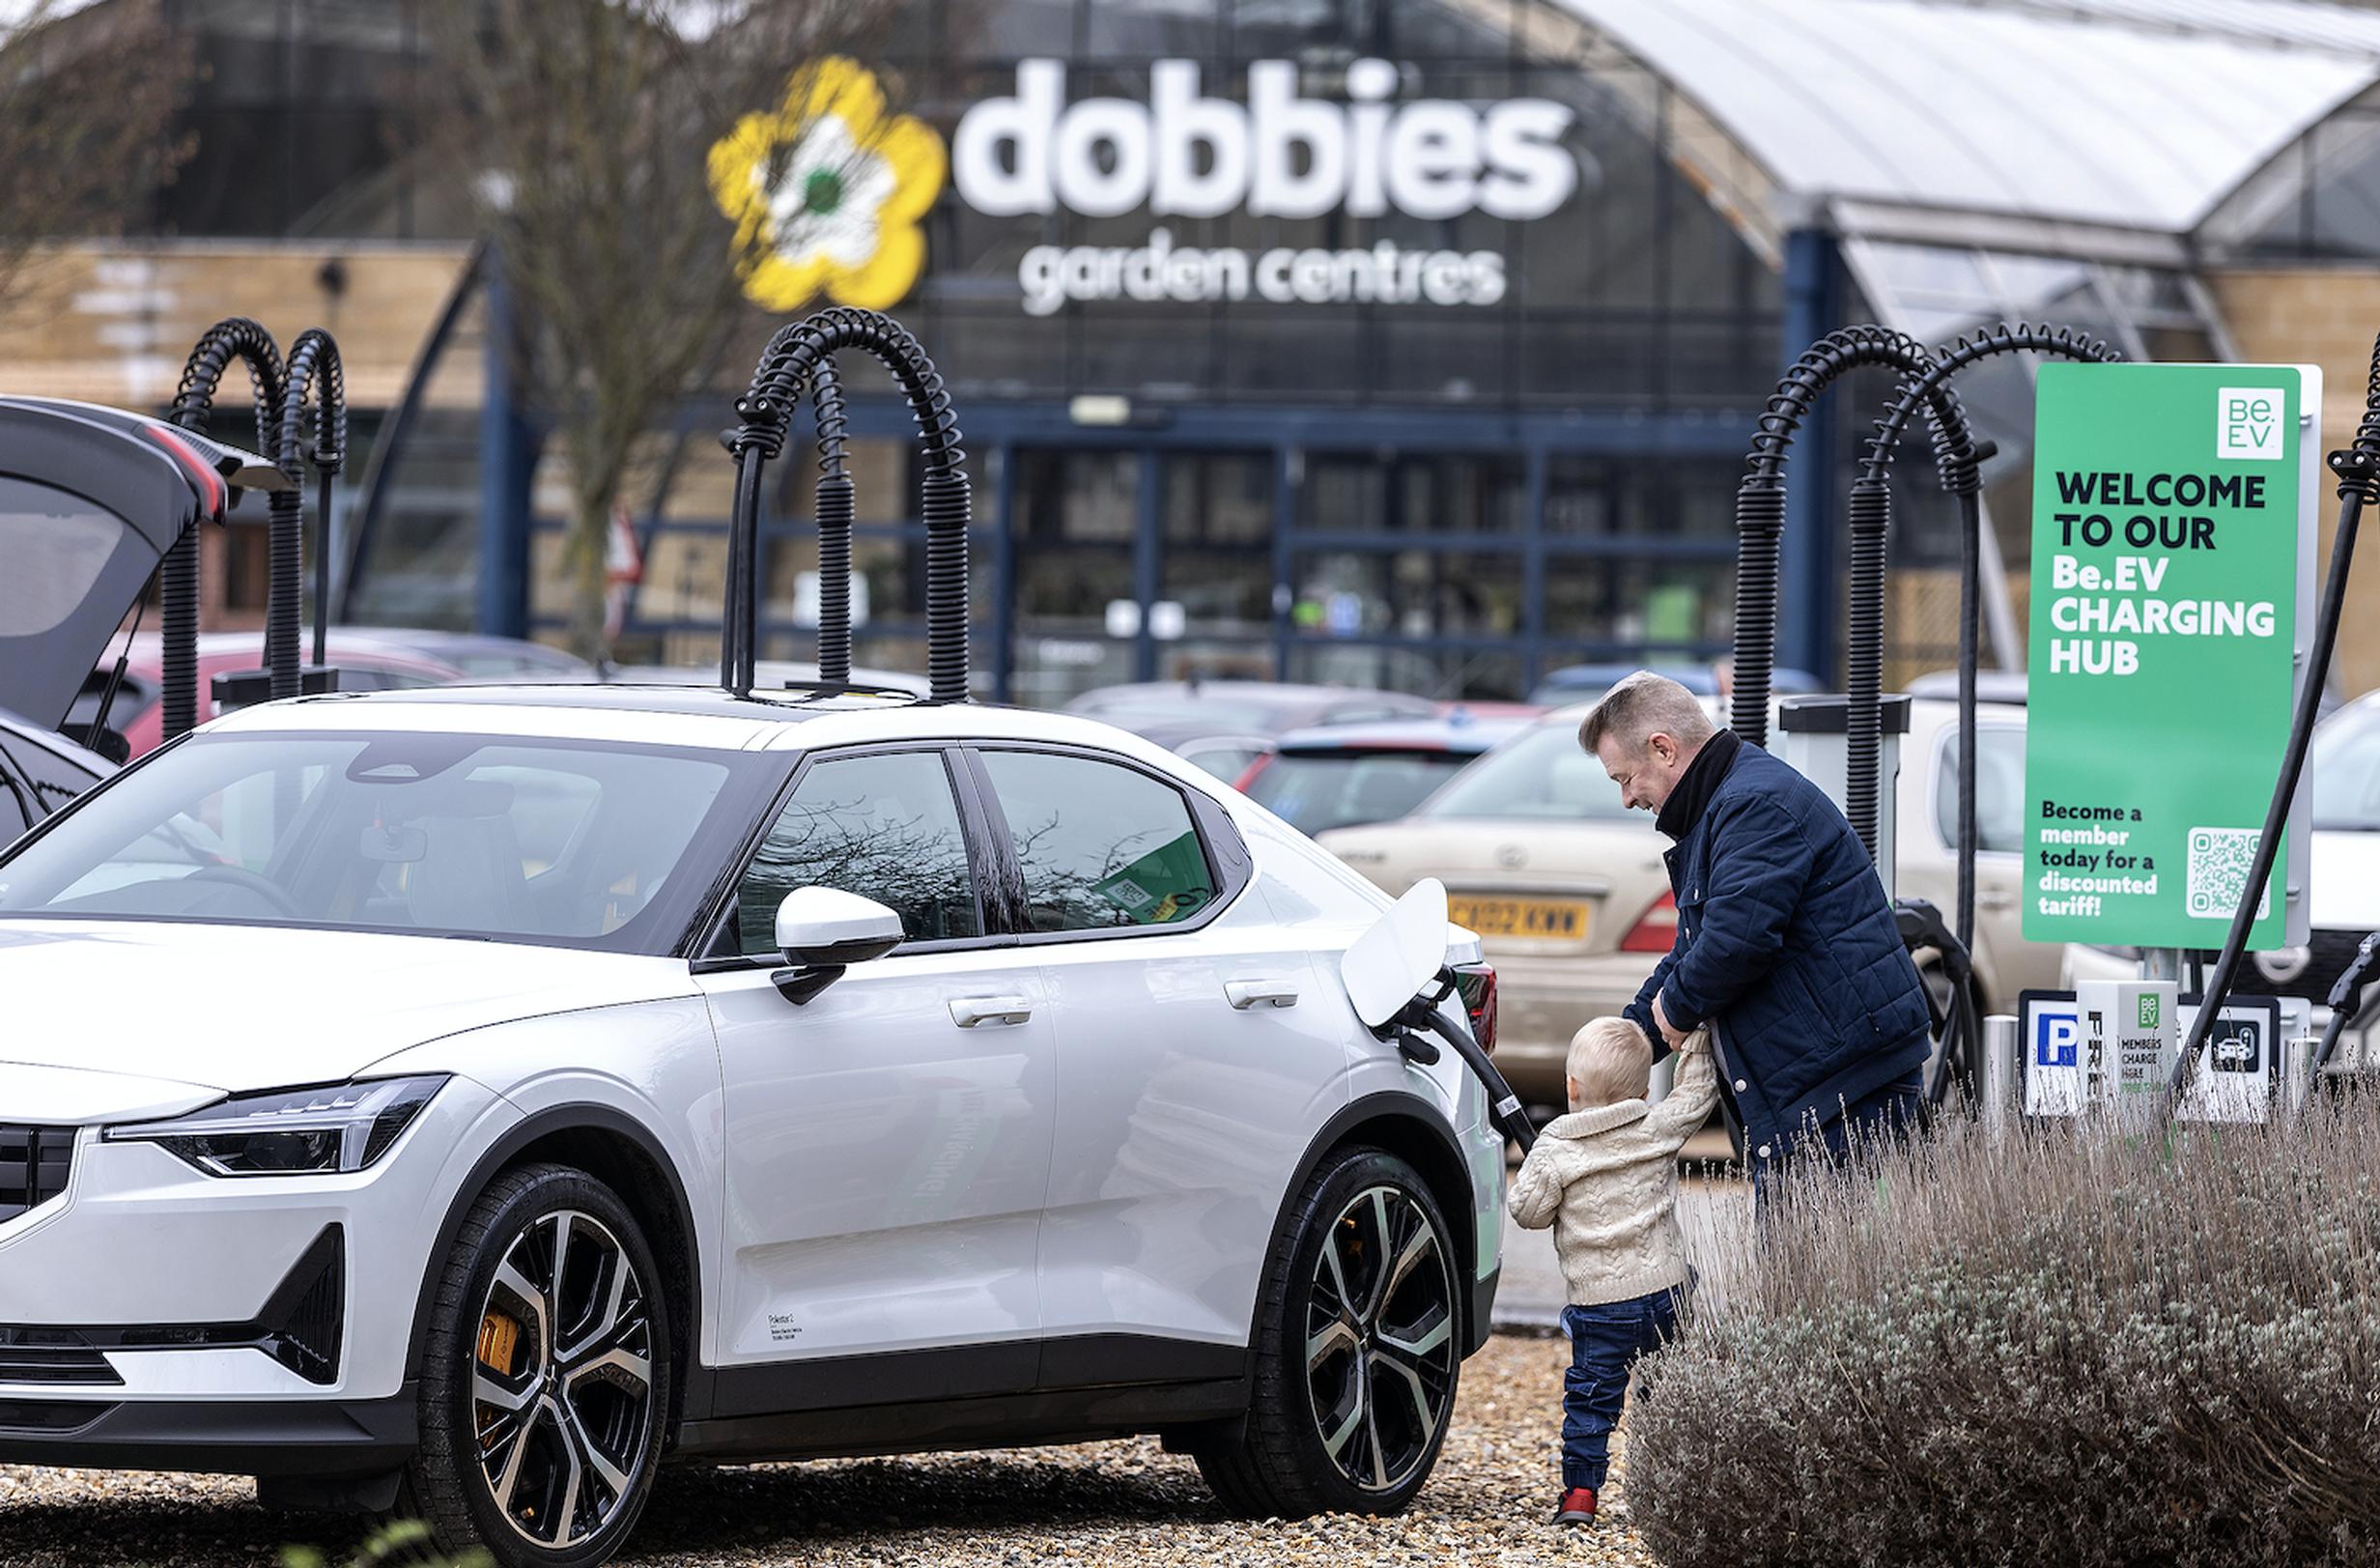 Dobbies` Huntingdon charging hub